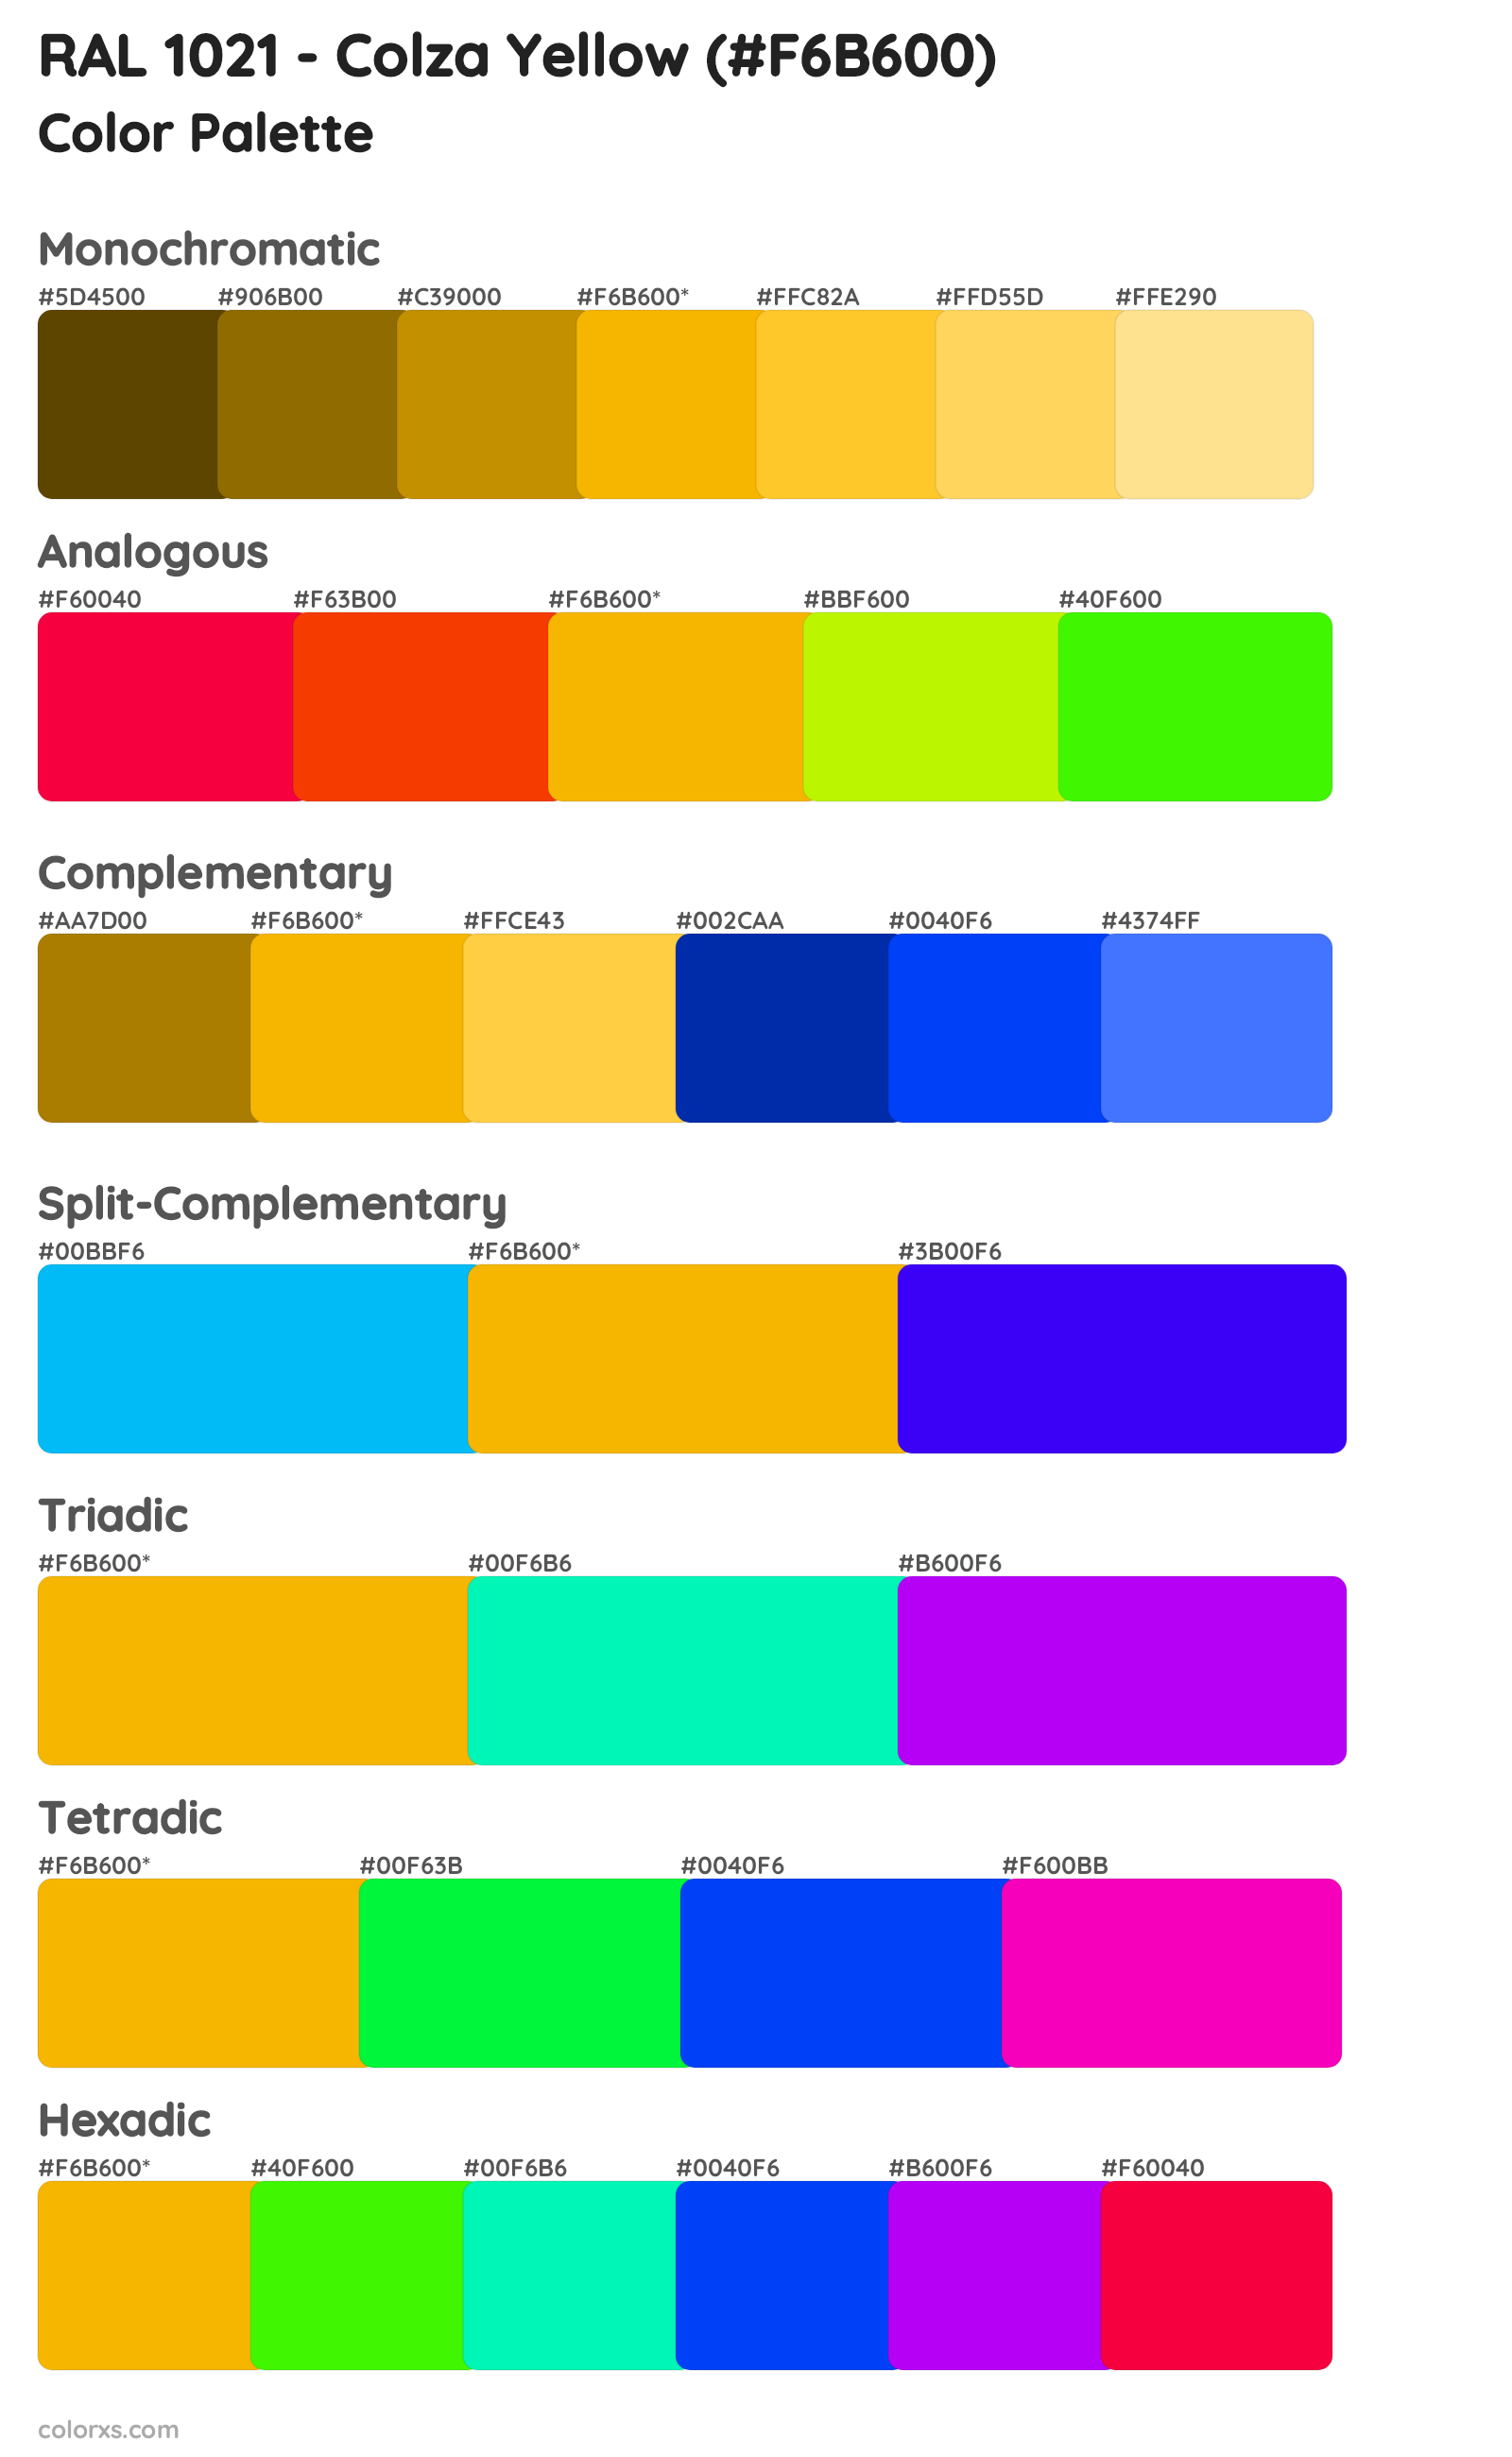 RAL 1021 - Colza Yellow Color Scheme Palettes